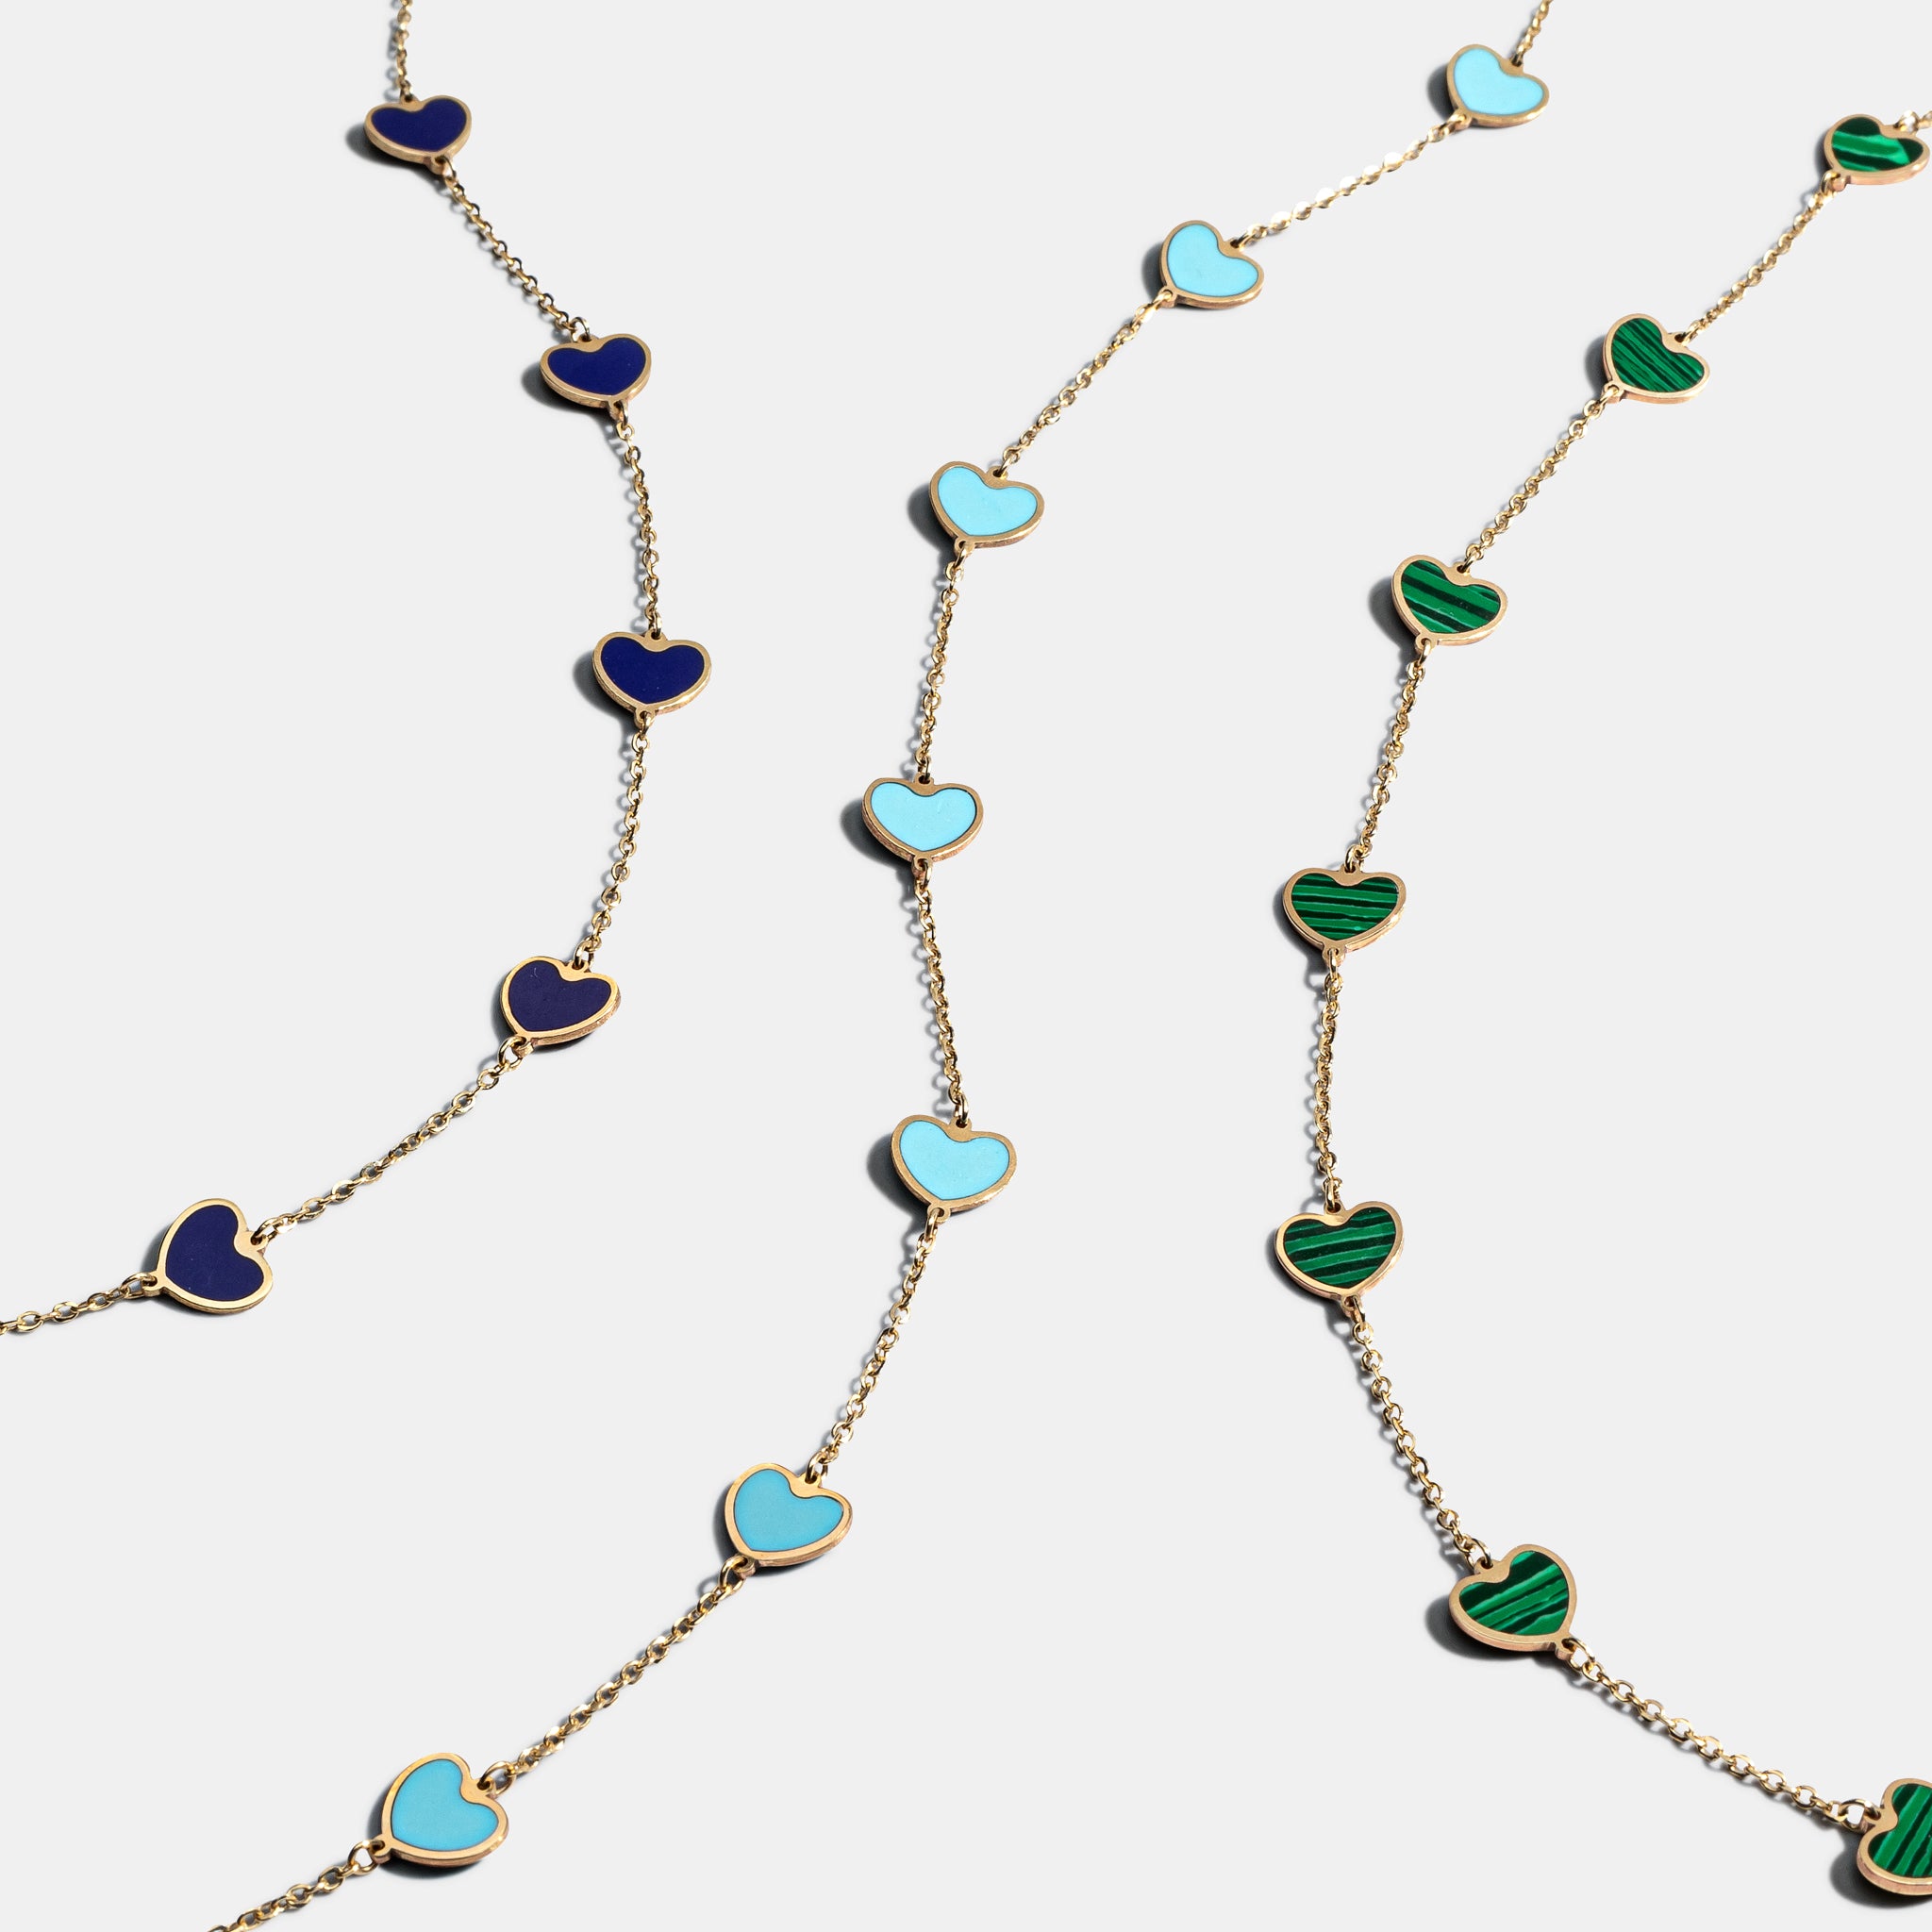 14 Karat Malachite Gemstone Heart Necklace